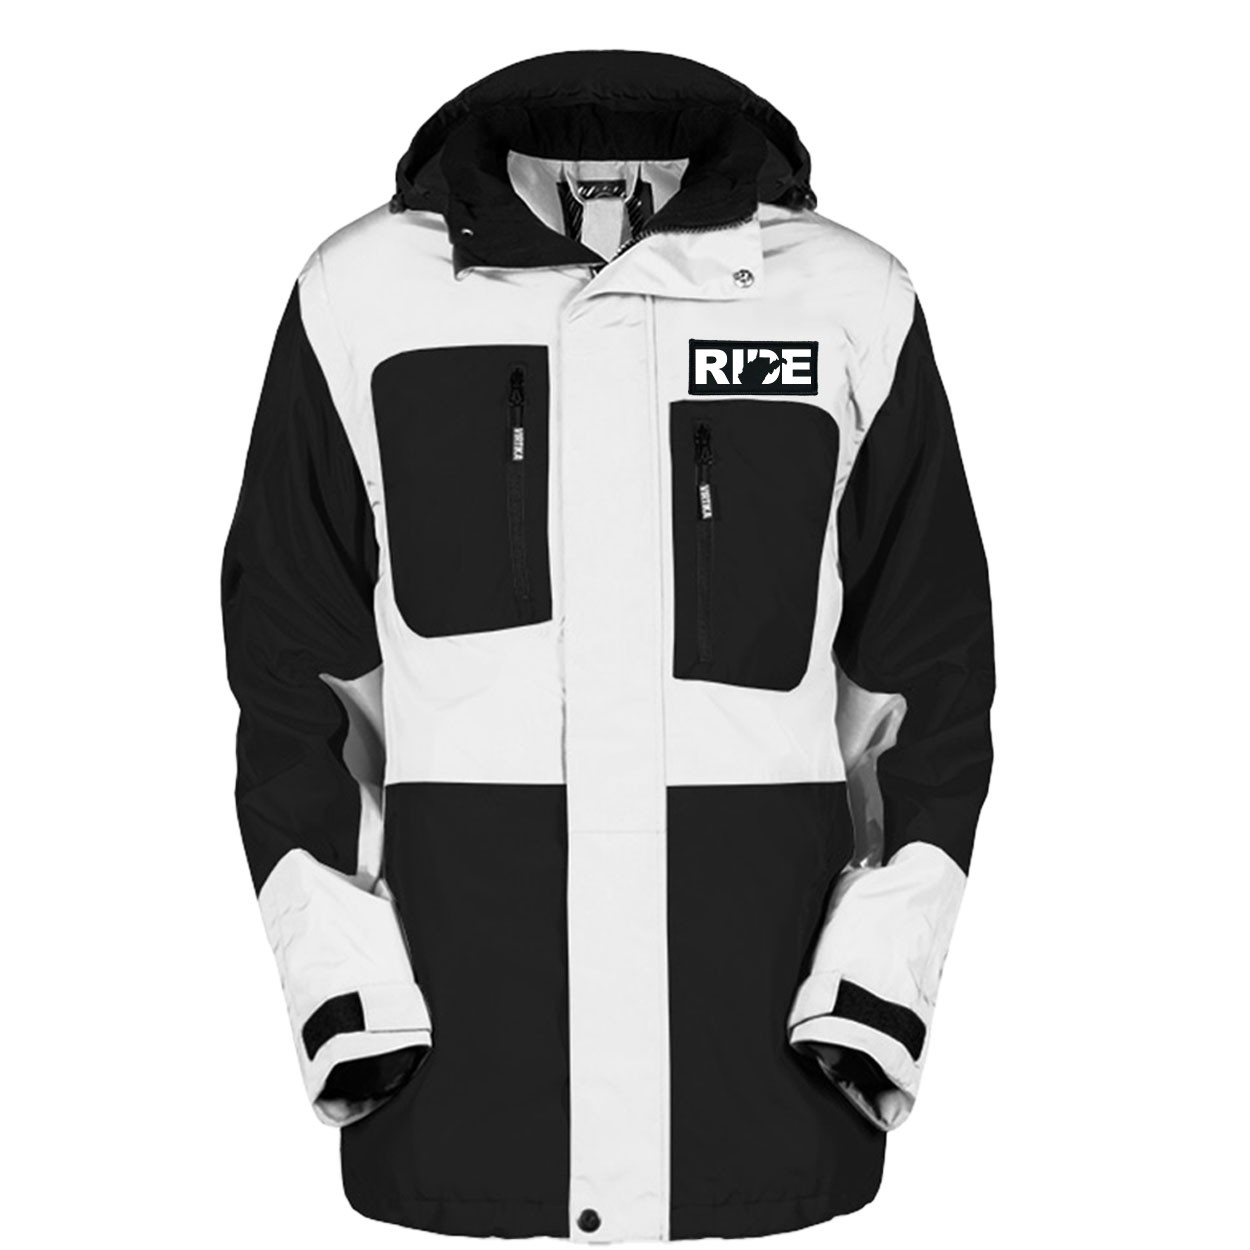 Ride West Virginia Pro Waterproof Breathable Winter Virtika Jacket Black/White (White Logo)